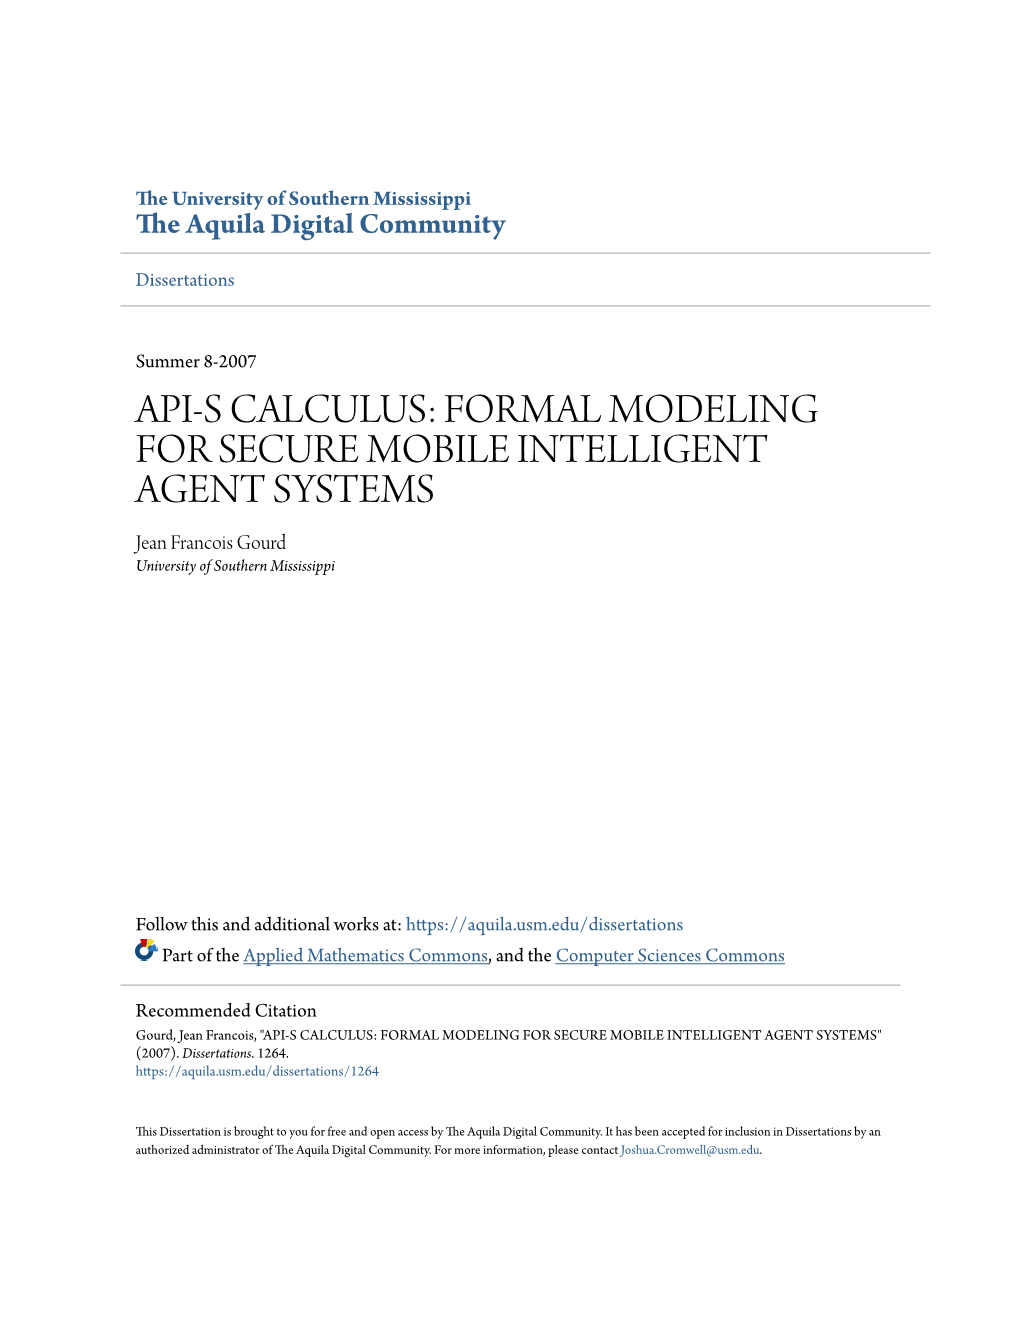 API-S CALCULUS: FORMAL MODELING for SECURE MOBILE INTELLIGENT AGENT SYSTEMS Jean Francois Gourd University of Southern Mississippi